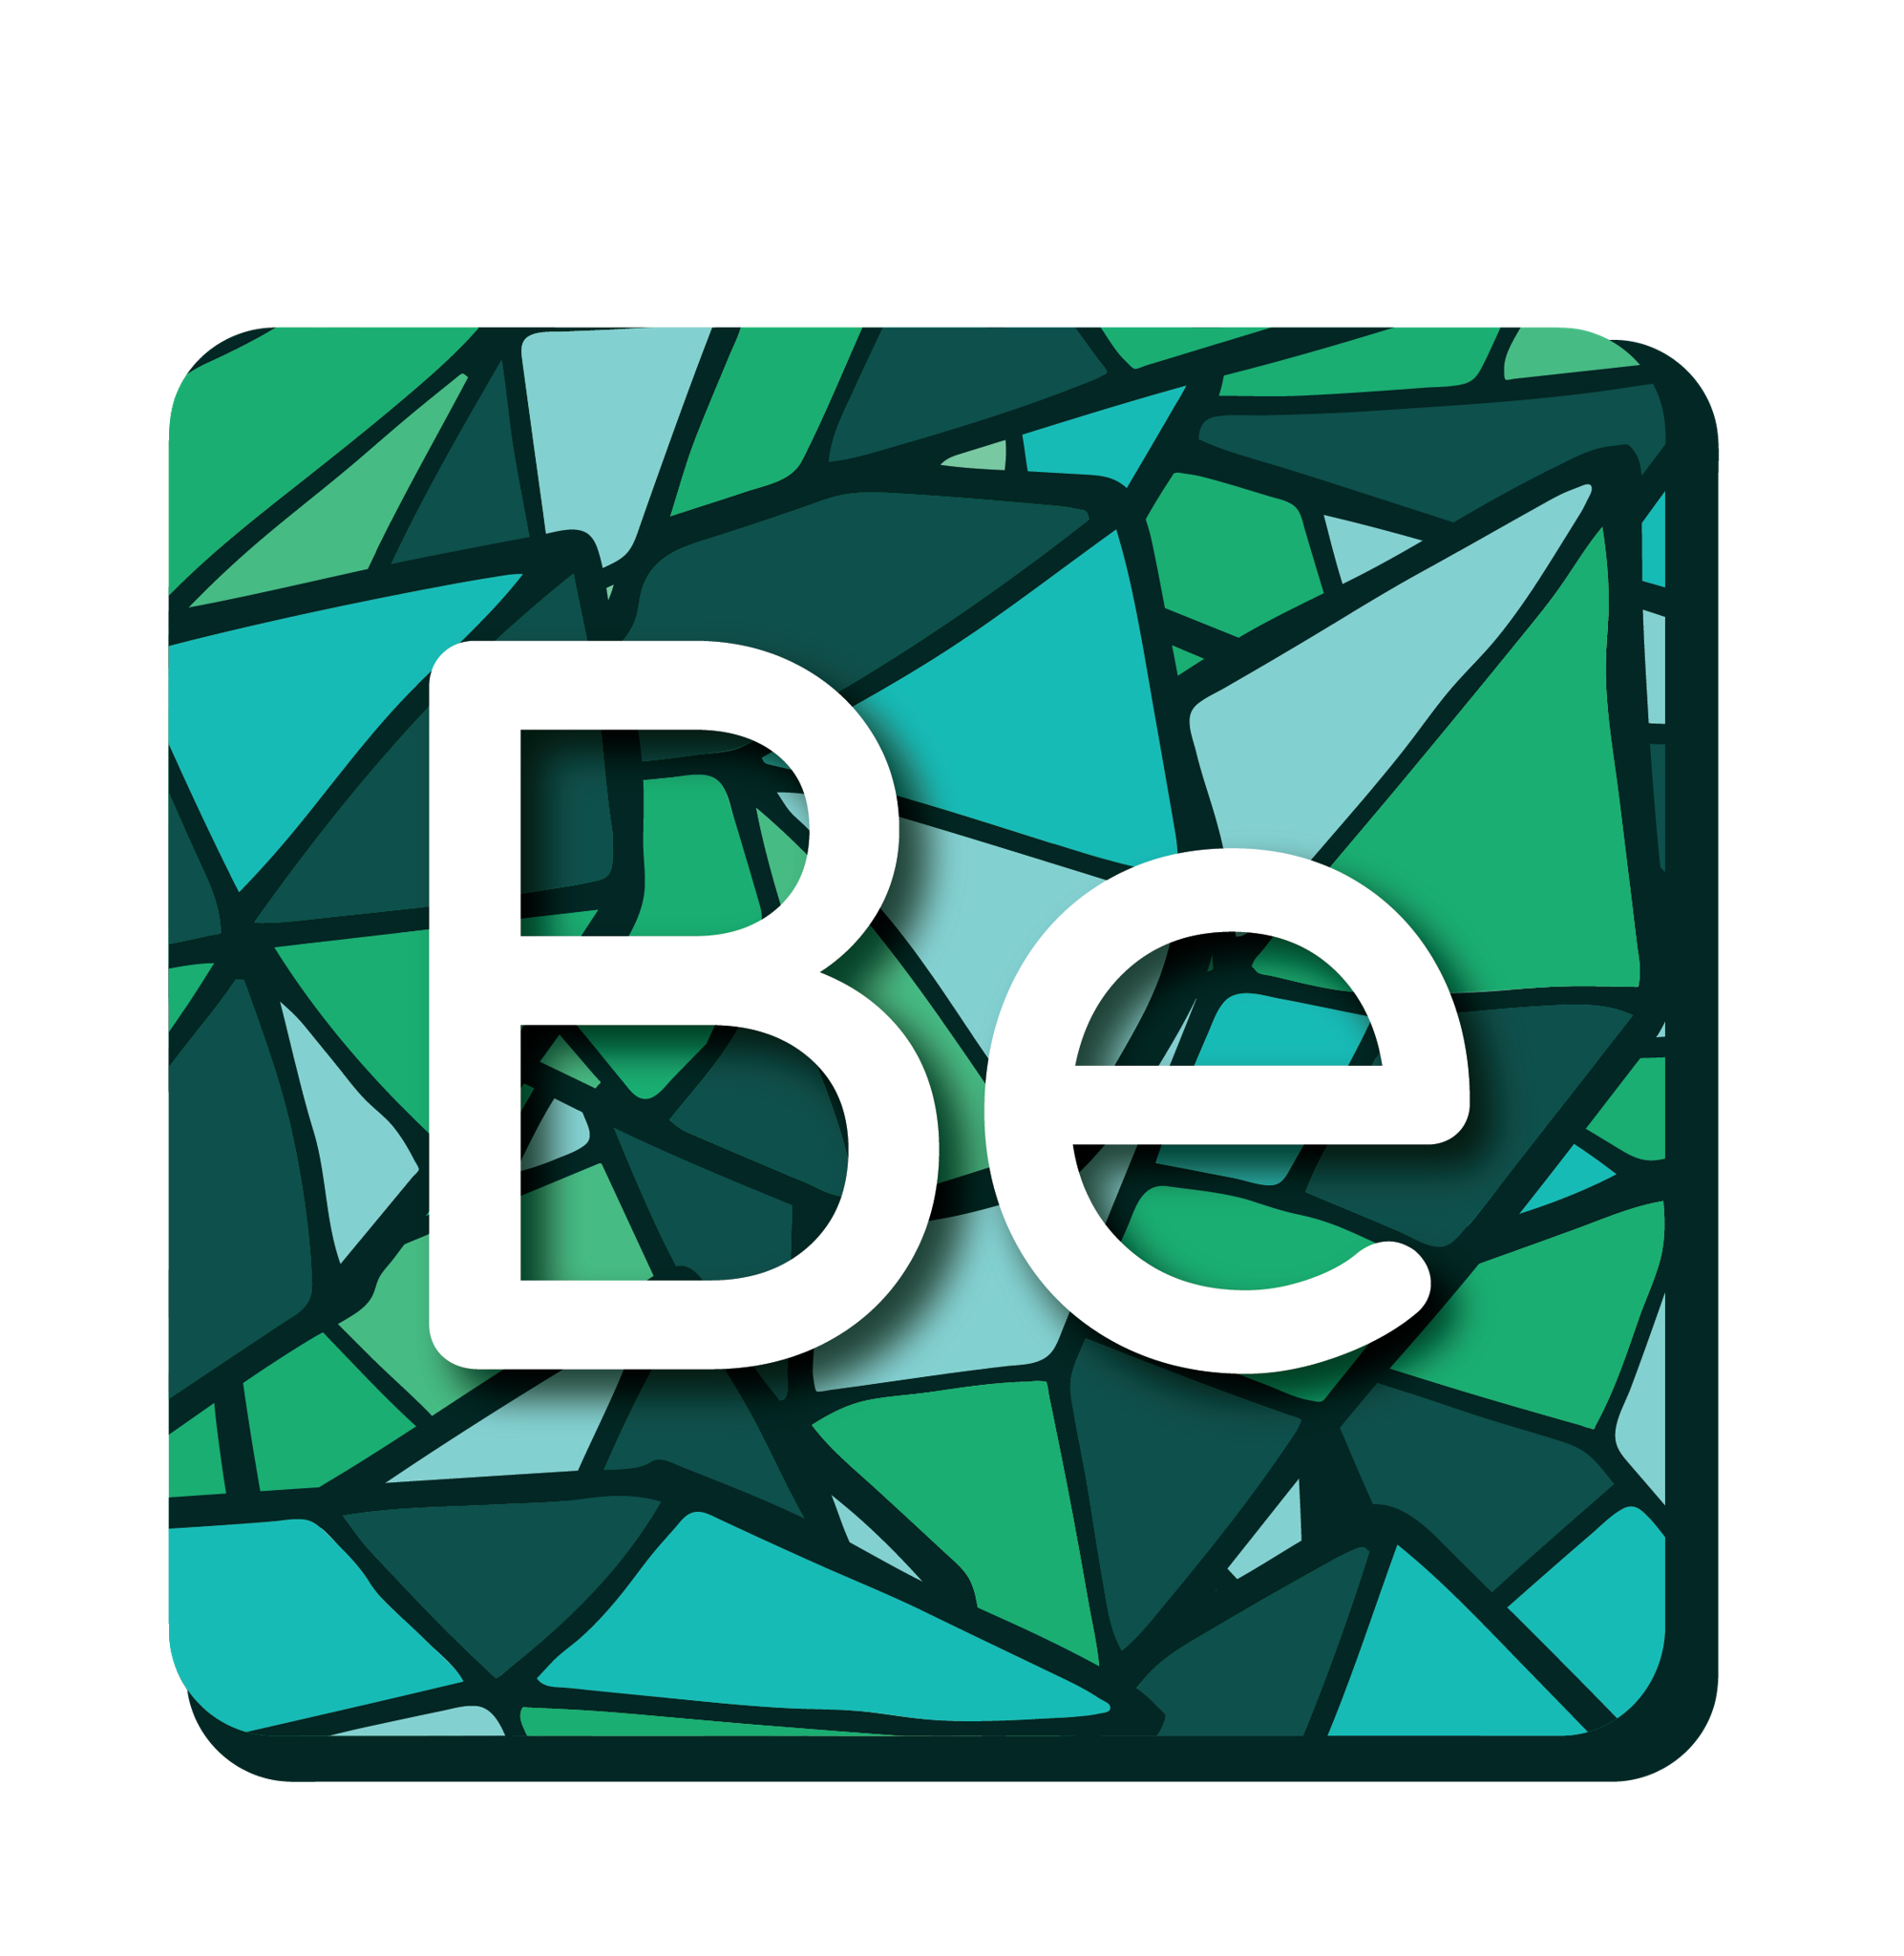 Beryllium Corporation